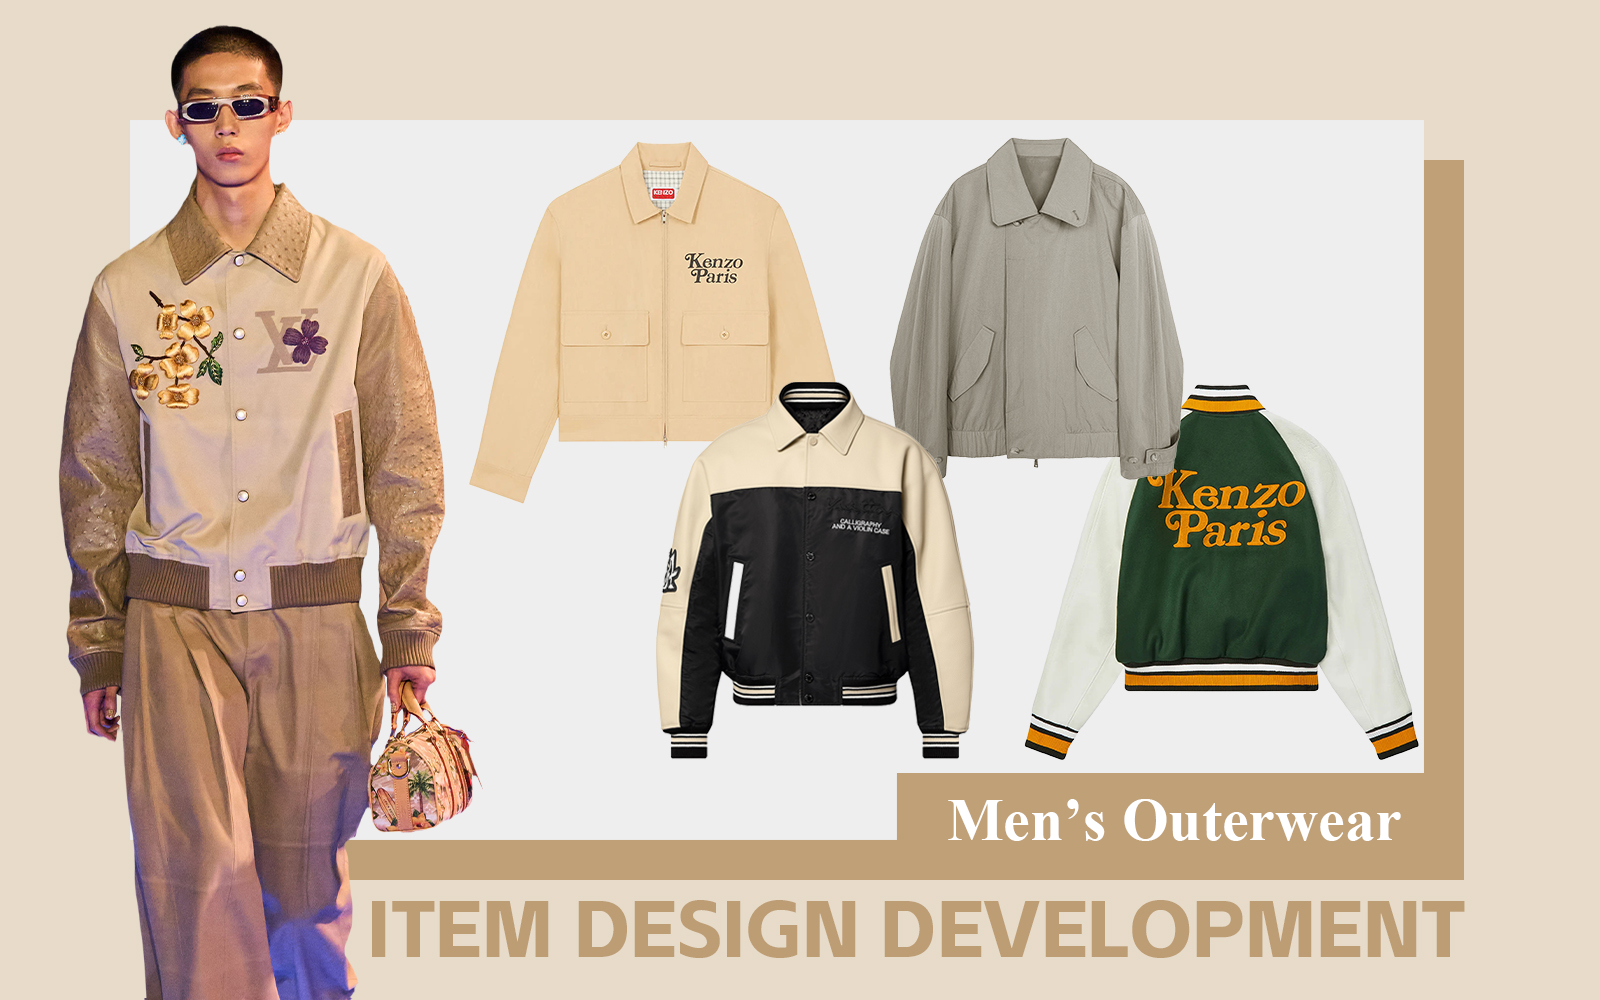 Fashion City -- The Design Development of Men's Outerwear